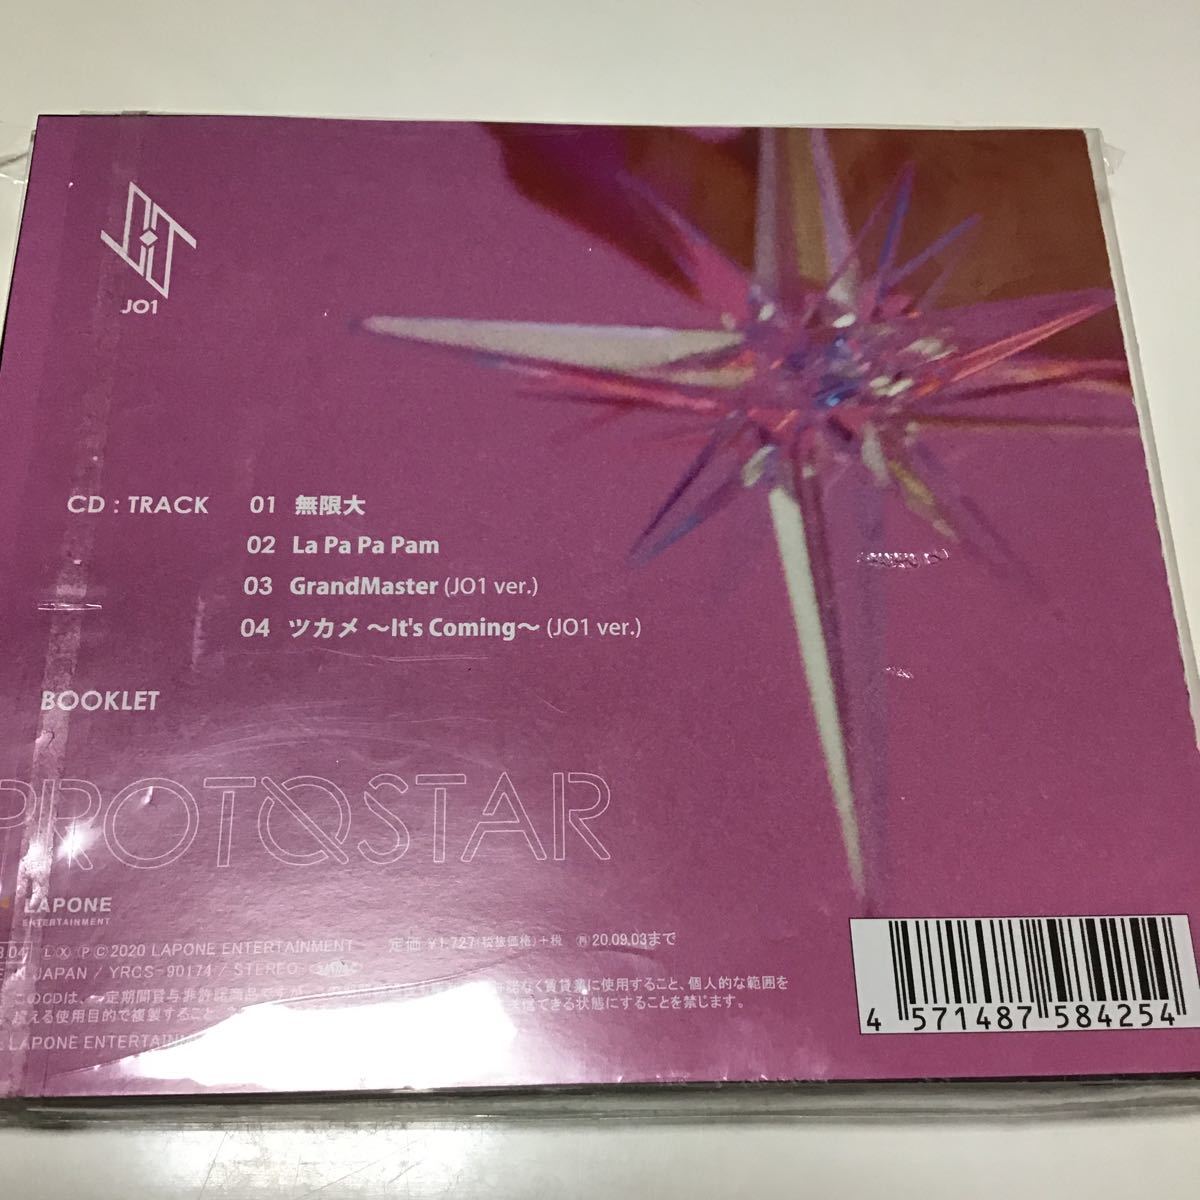 「PROTOSTAR」 JO1 定価: ￥ 1,899 #JO1 #CD #限定盤 #邦楽 韓国のオーディション番組『PRODUCE 101』の日本版にて誕生した_画像2